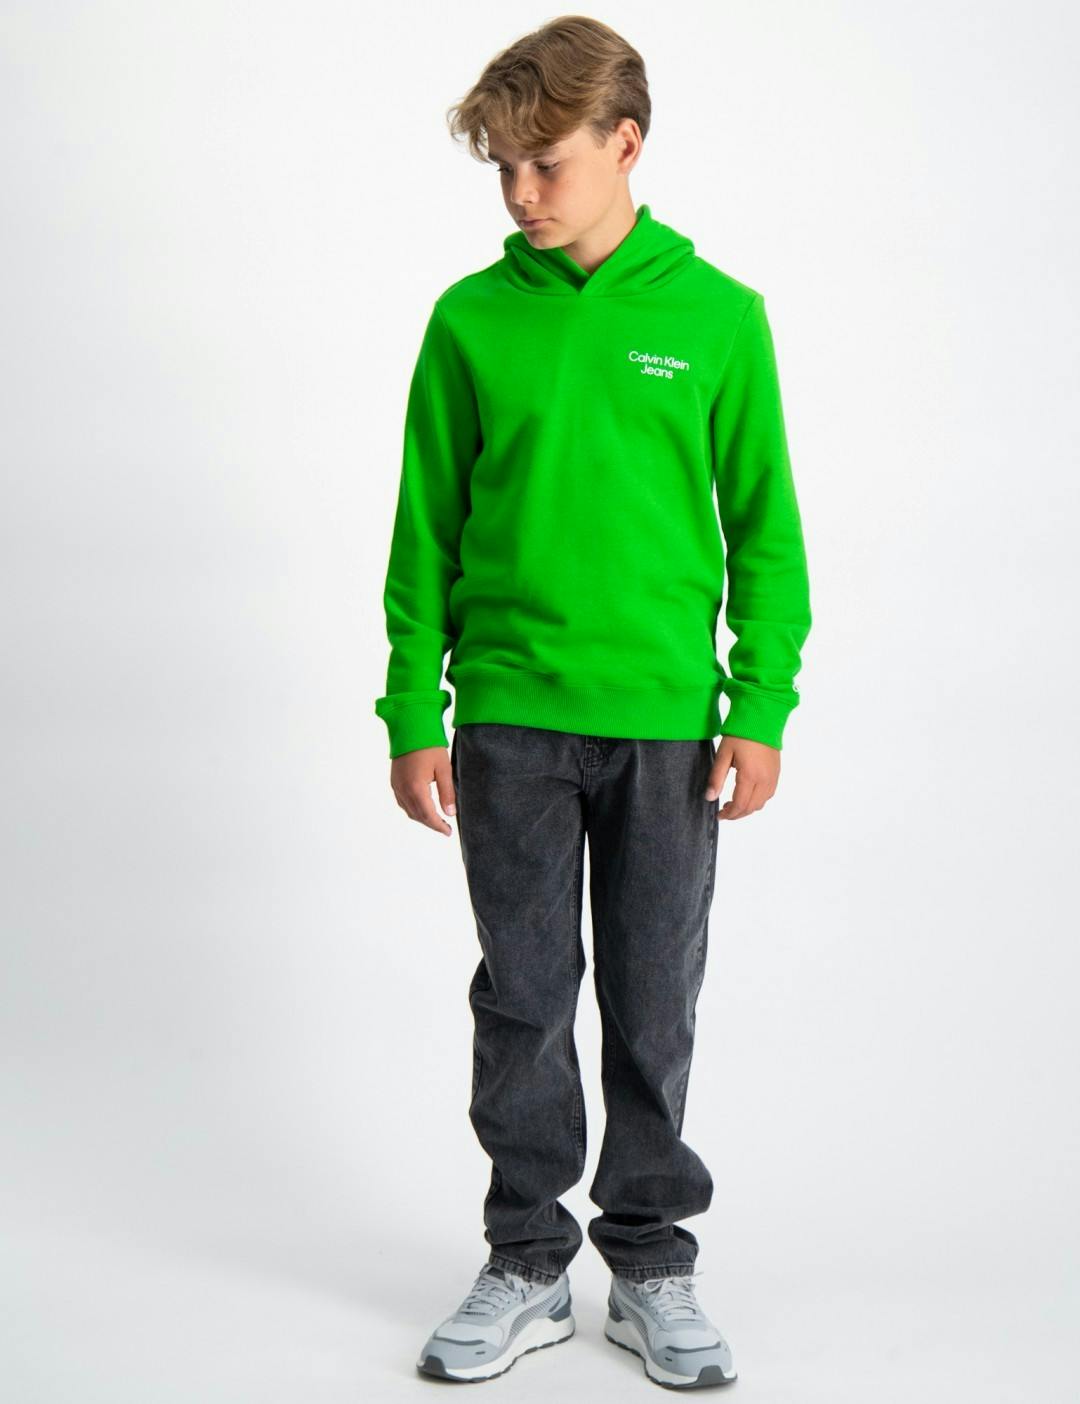 Kille Brand LOGO Store STACK Grön Kids | för HOODIE CKJ